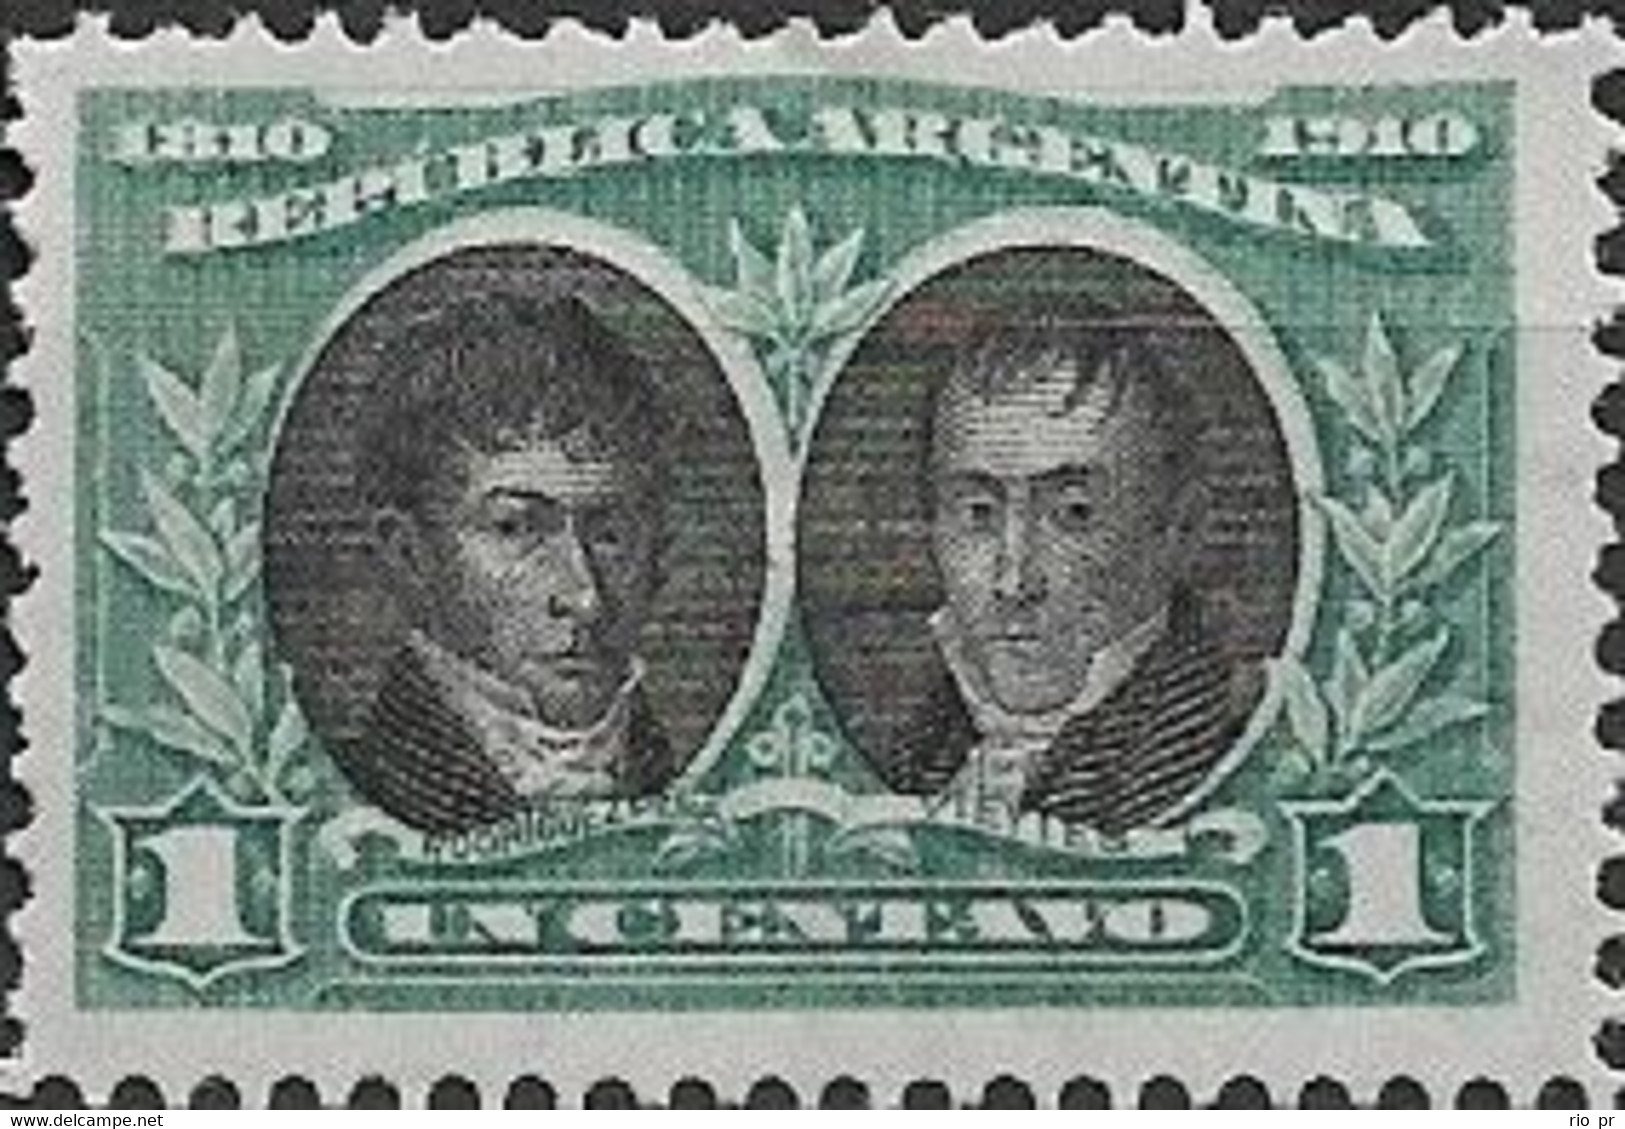 ARGENTINA - CENTENARY OF THE ARGENTINE REPUBLIC (NICOLAS R. PEÑA AND HIPÓLITO VIEYTES, 1 C) 1910 - MNH - Unused Stamps